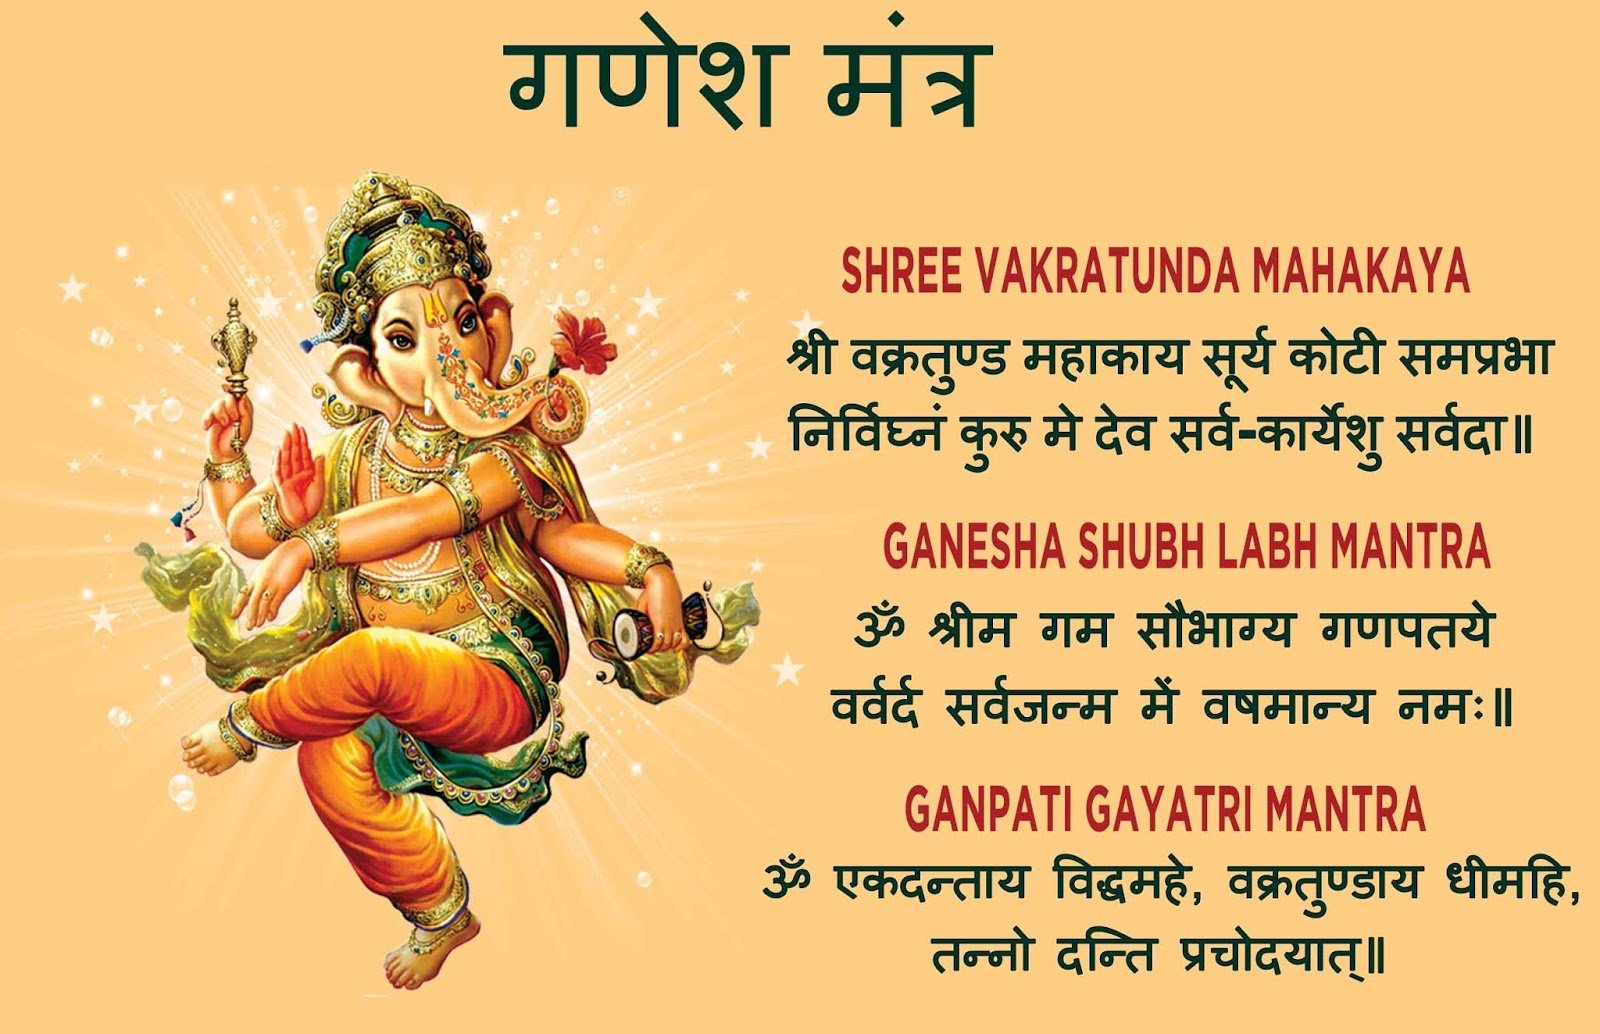 Ho to read Ganesh mantra